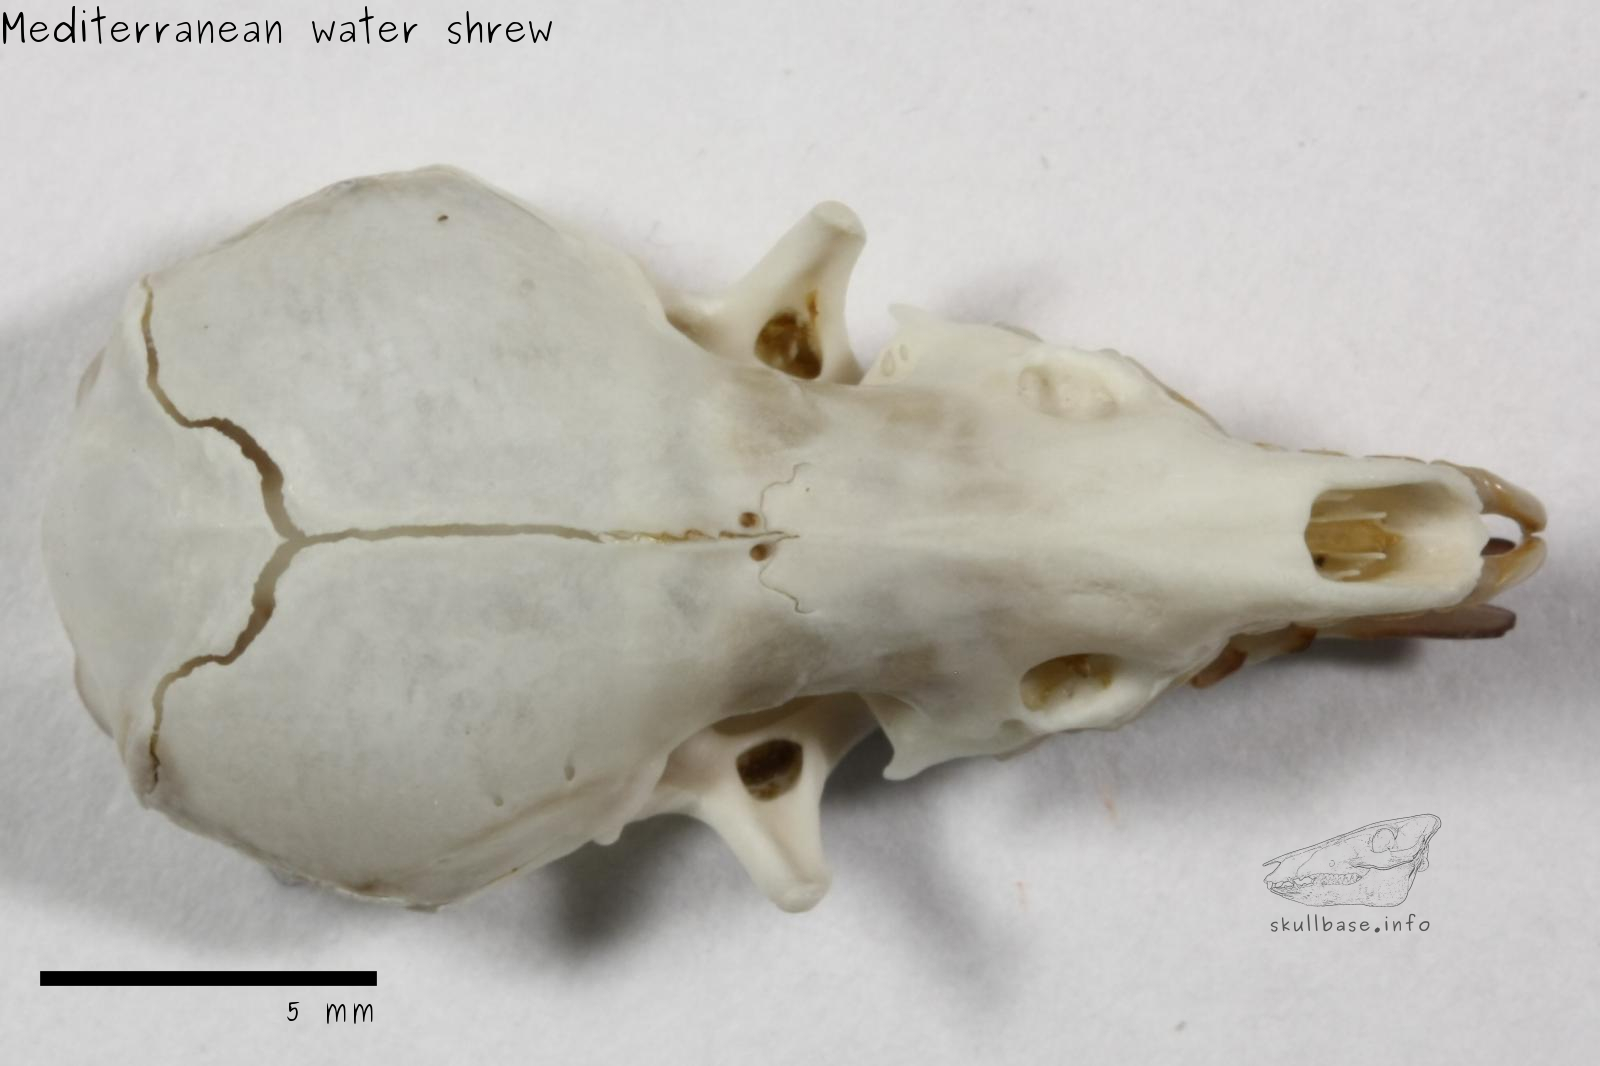 Mediterranean water shrew (Neomys anomalus) skull dorsal view